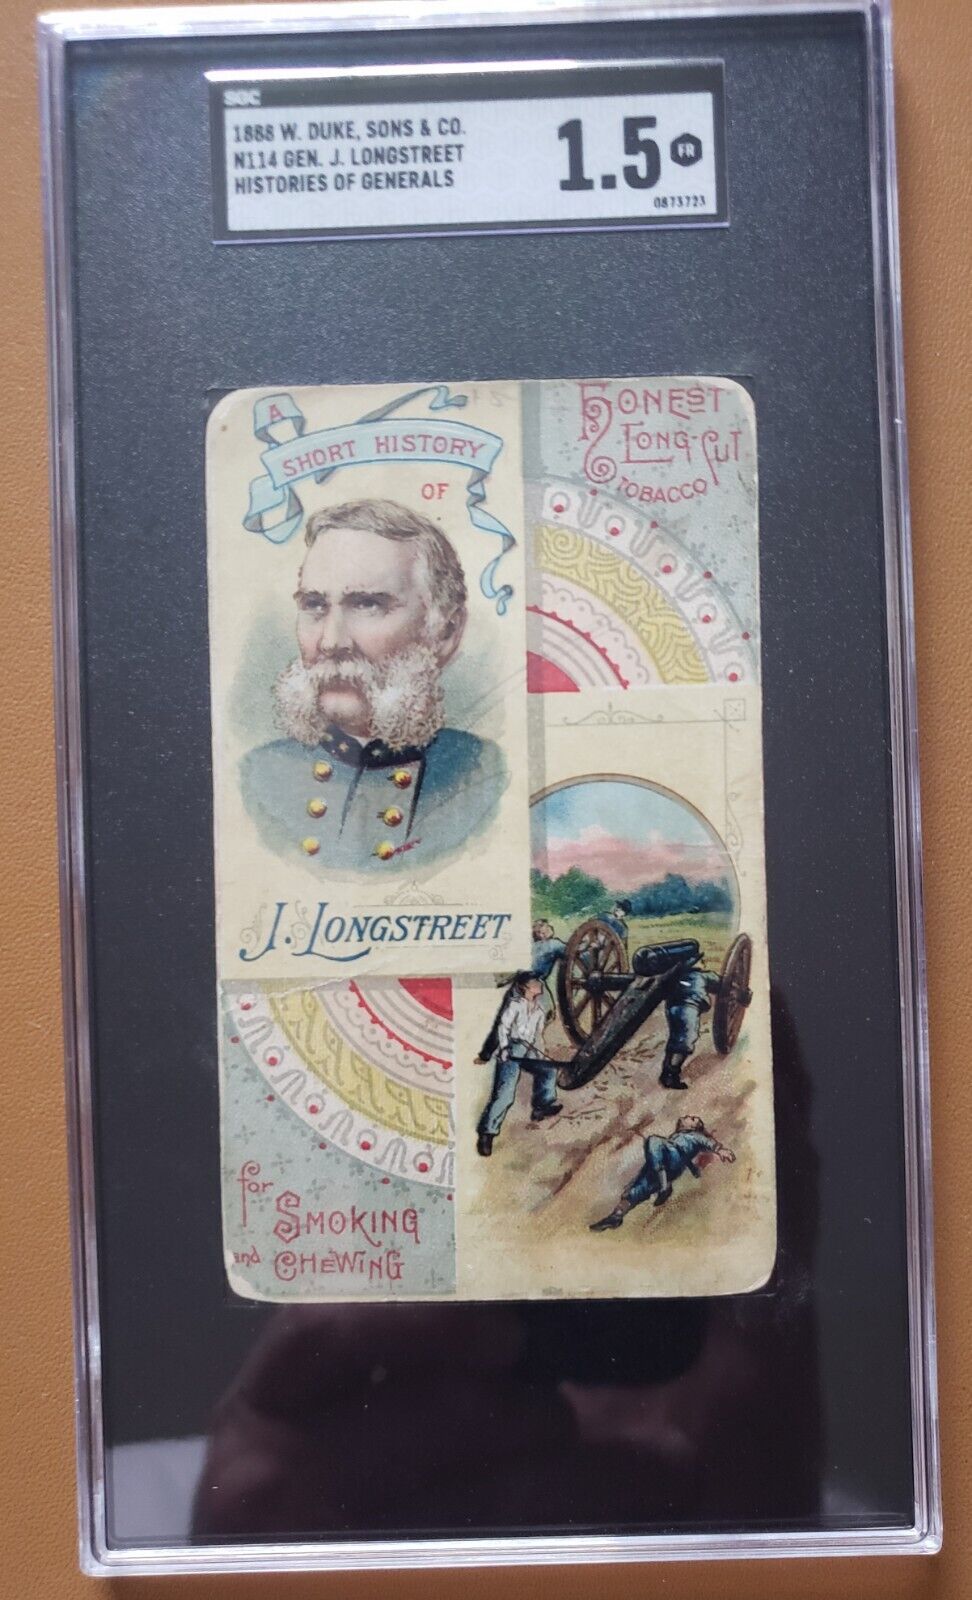 N114 1888 W Duke Sons & Co. Histories of Generals James Longstreet SGC 1.5 Nice